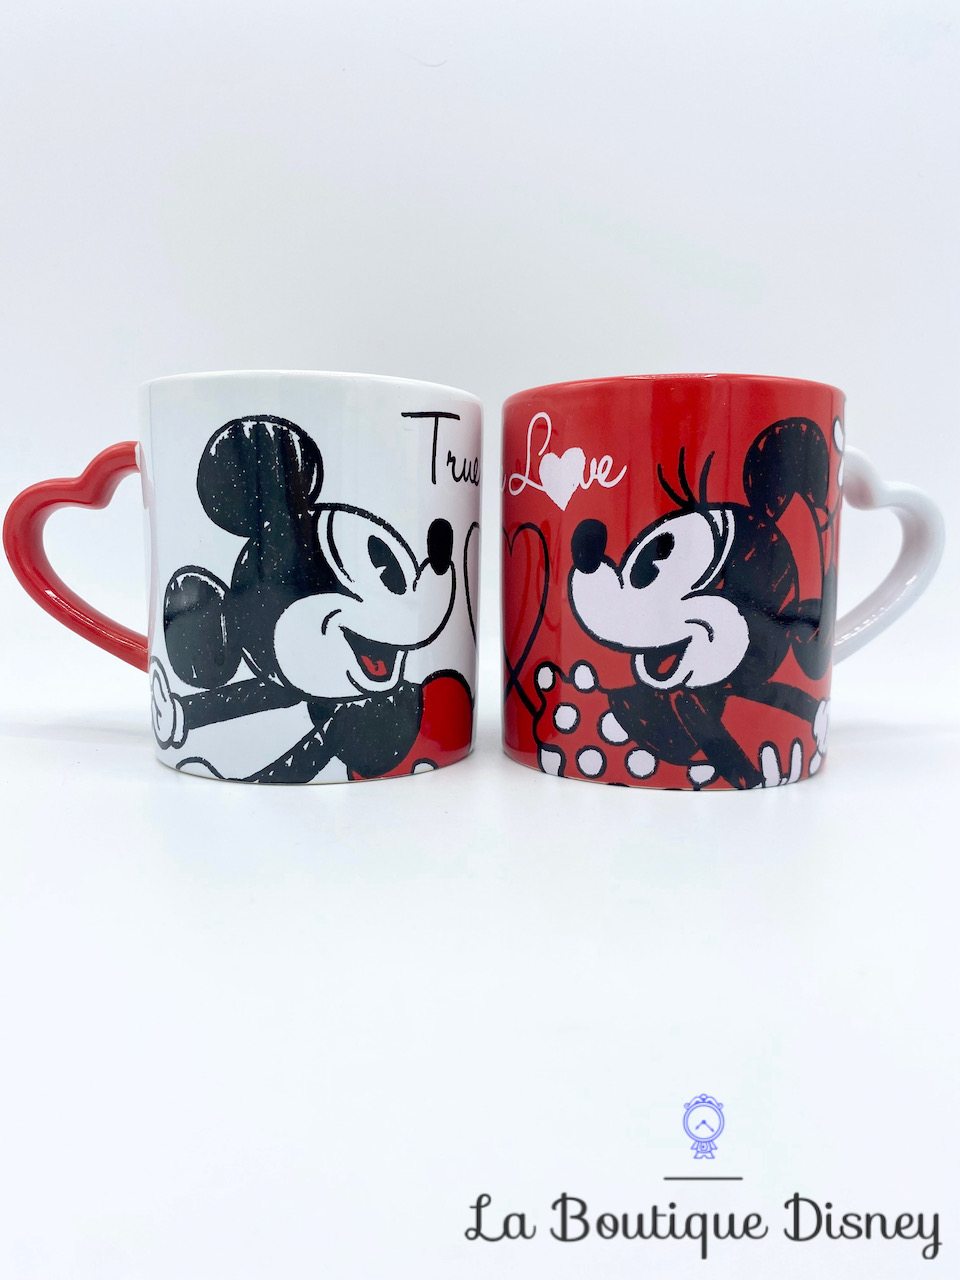 Paire Tasses Mickey Minnie Disneyland Paris mug Disney True Love Coeur rouge noir blanc duo